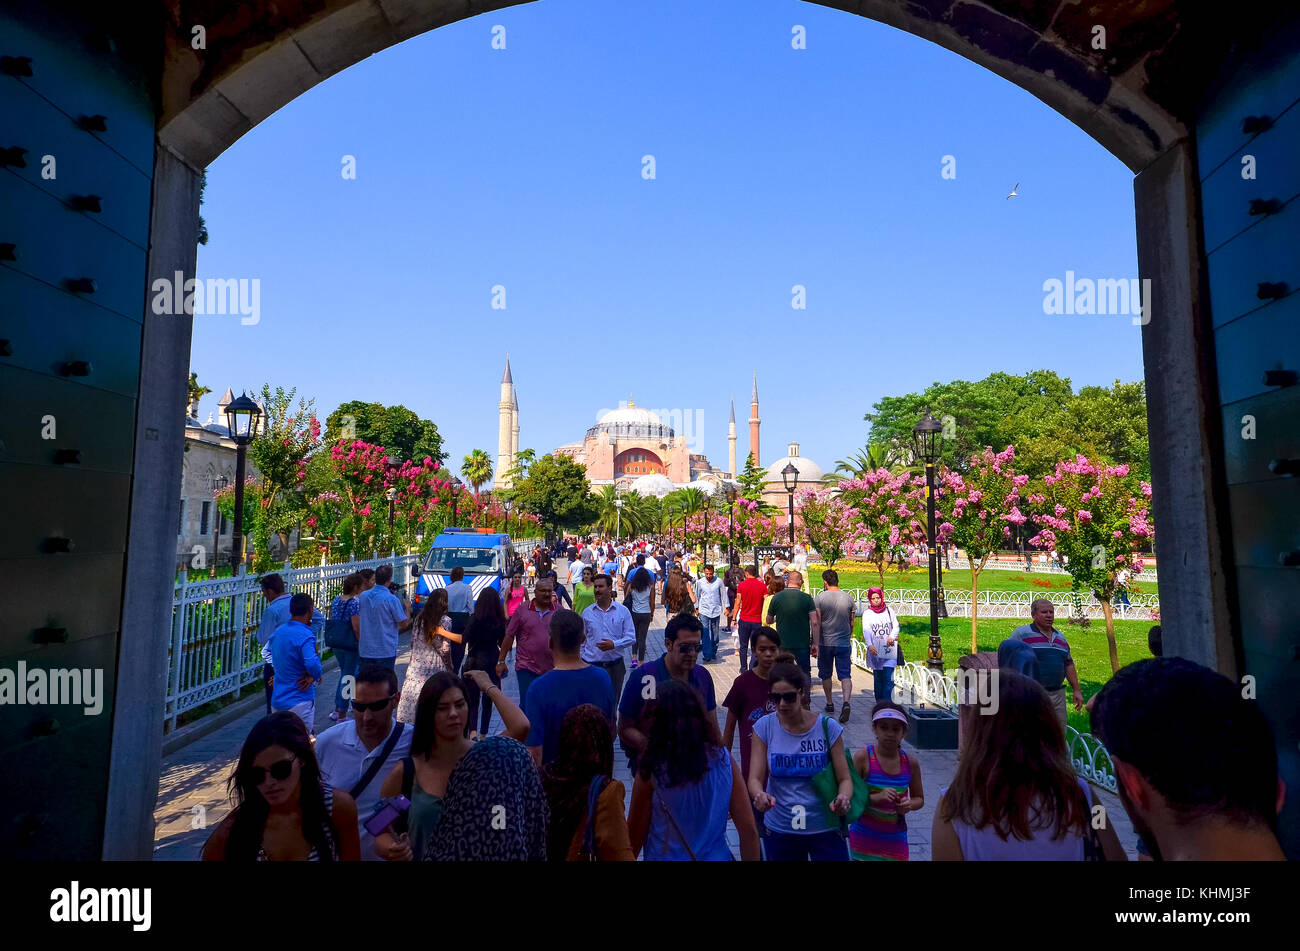 Hagia Sophia, the famous church, landmark of Istanbul in Turkey on August 24, 2017. Stock Photo